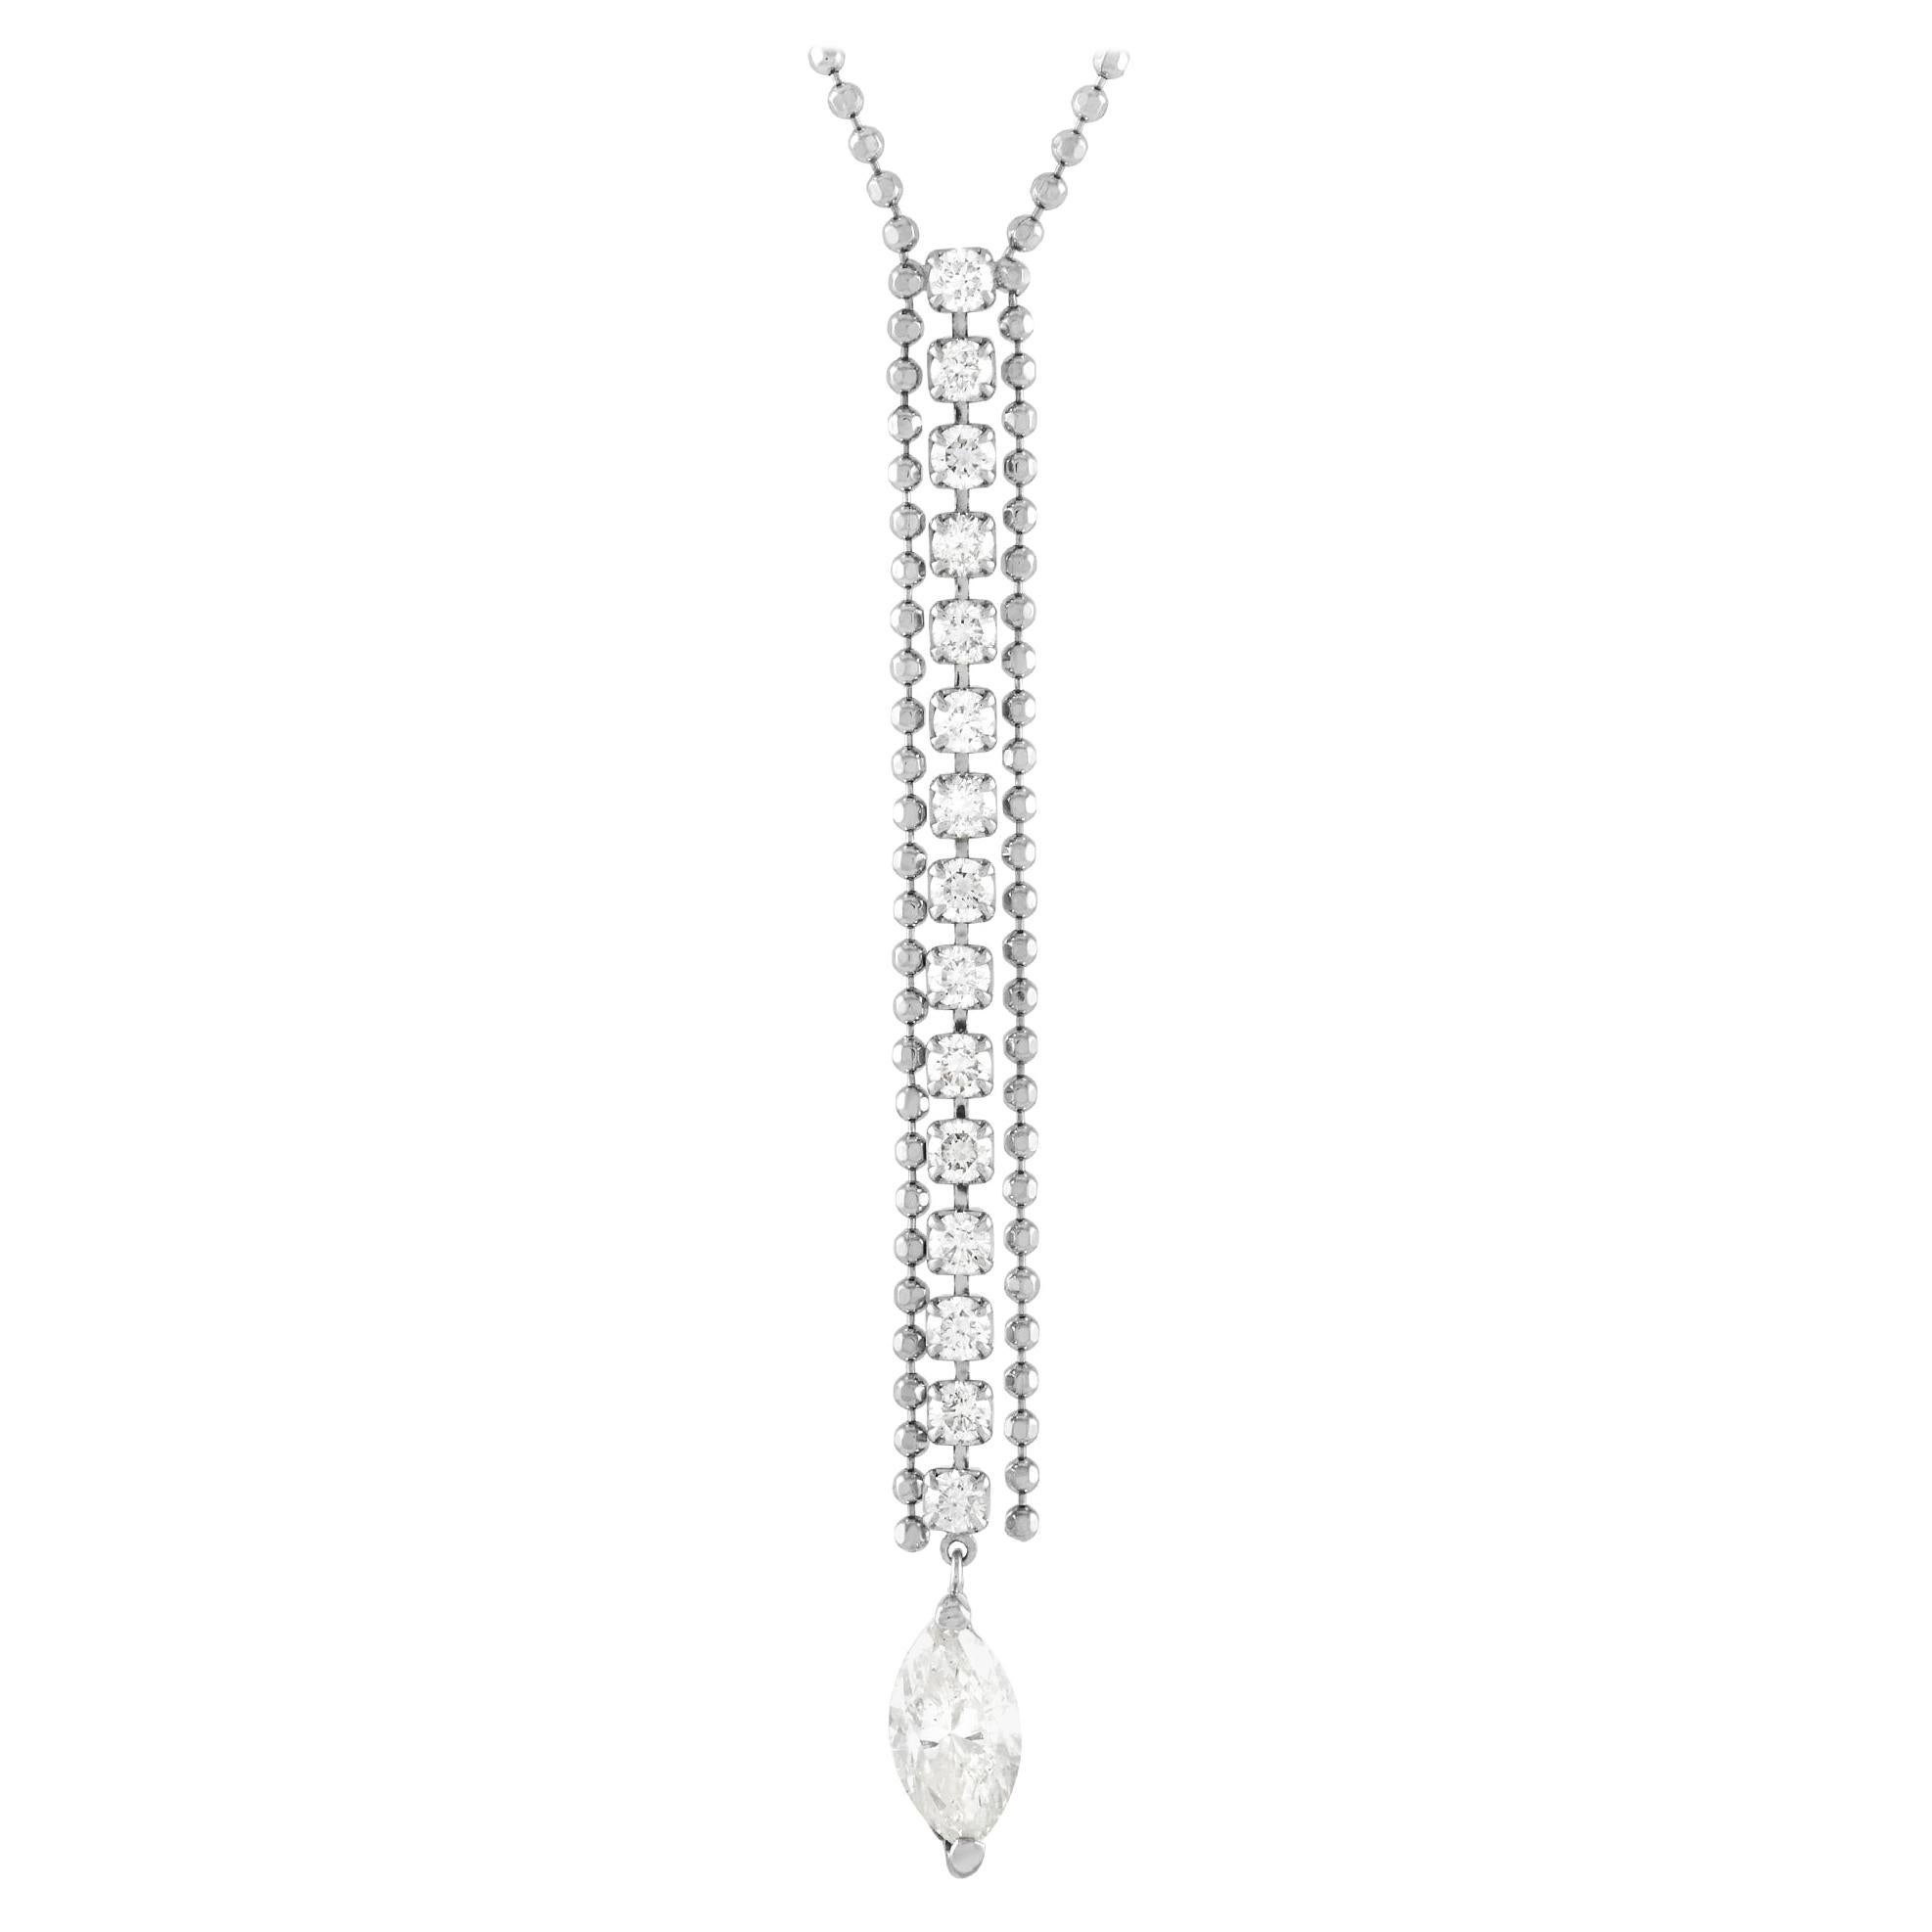 LB Exclusive 18K White Gold 1.85 Ct Diamond Necklace